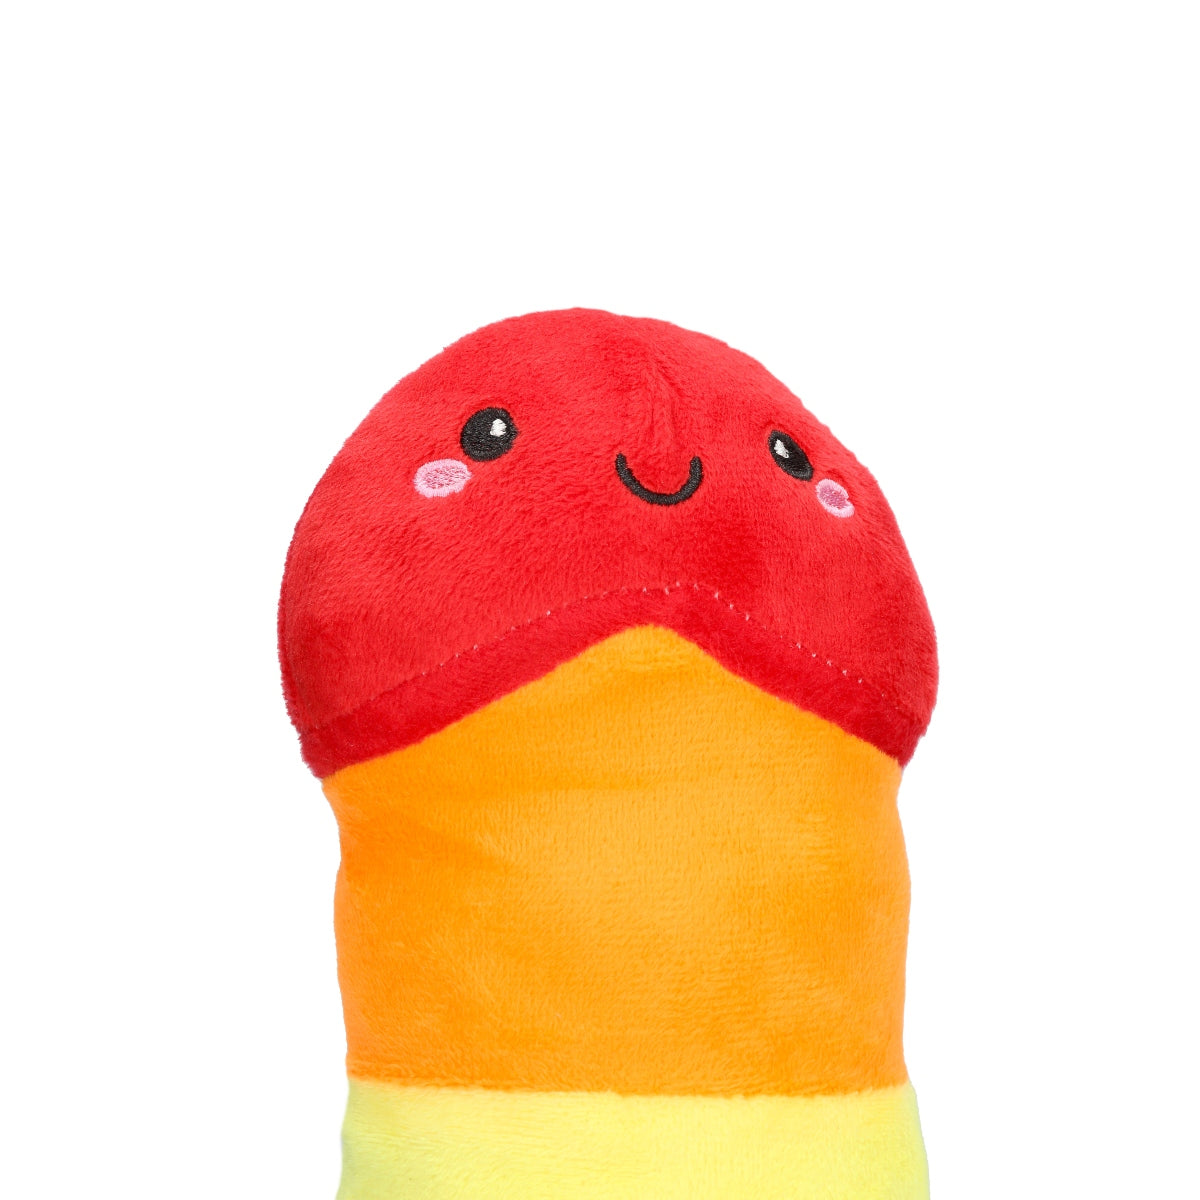 S-Line Penis Stuffed Toy Rainbow 12 Inch